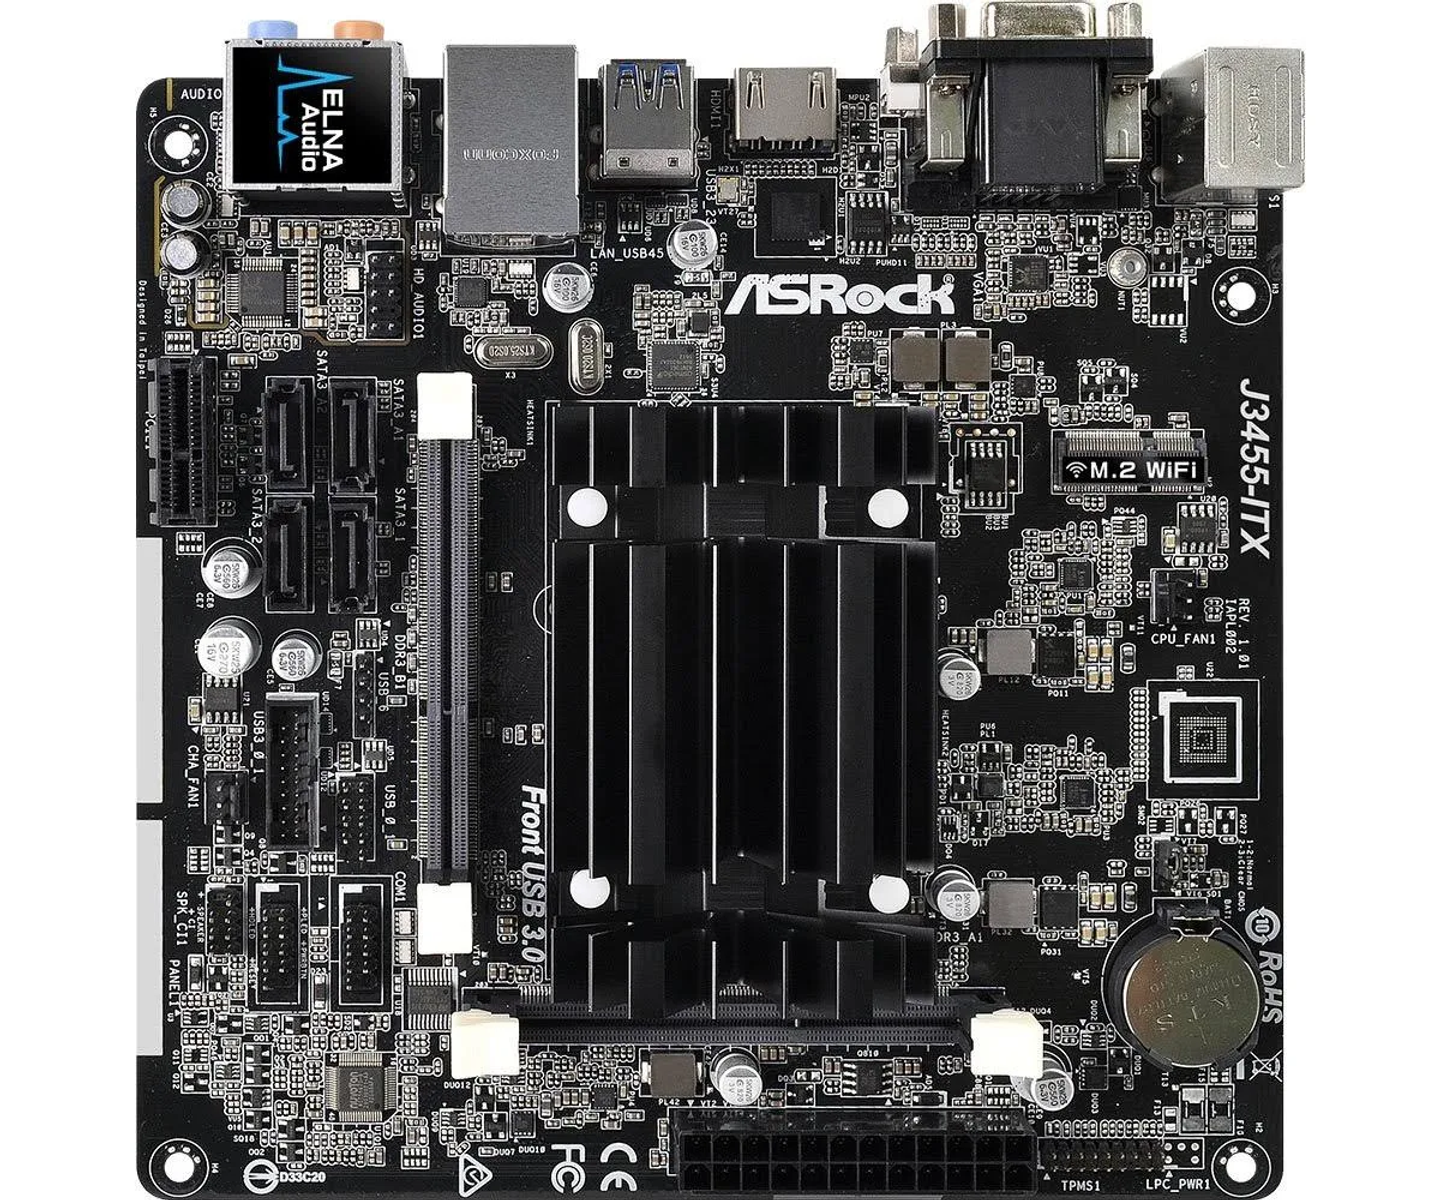 ASROCK J3455-ITX Mainboard Bundle CPU + Black